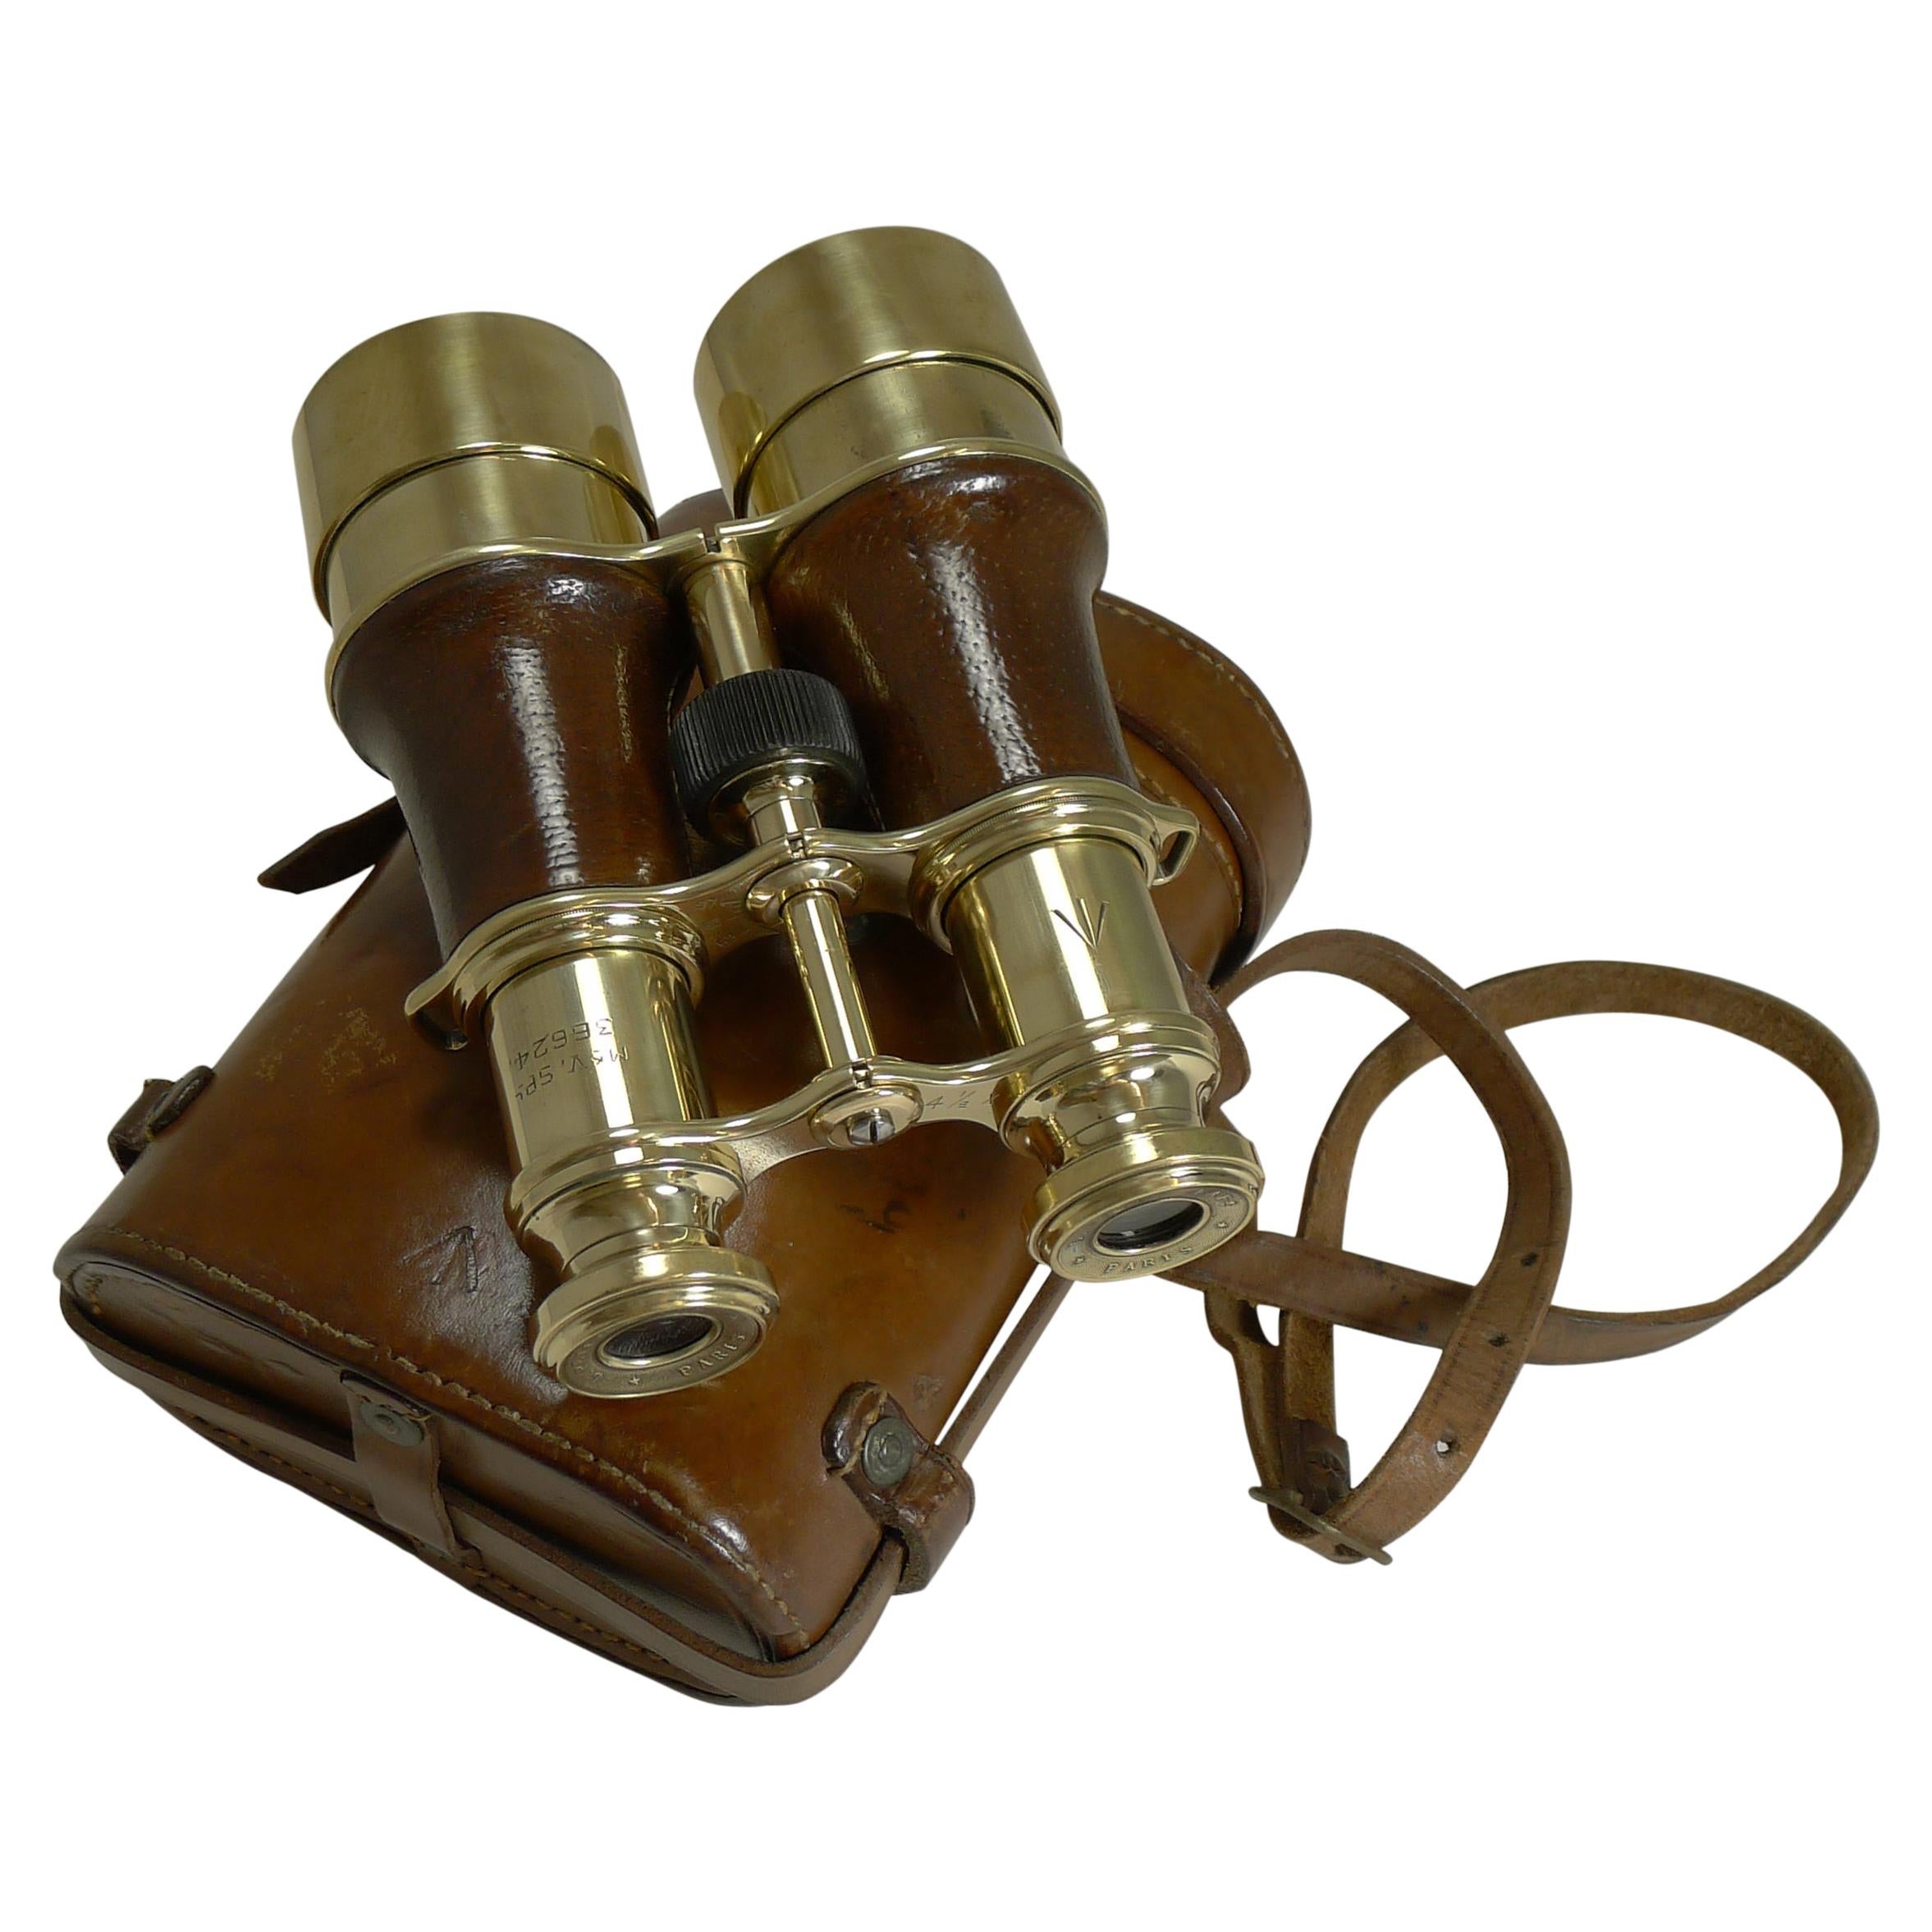 WWI Issued Antique French Binoculars Signed L. Petit, Paris